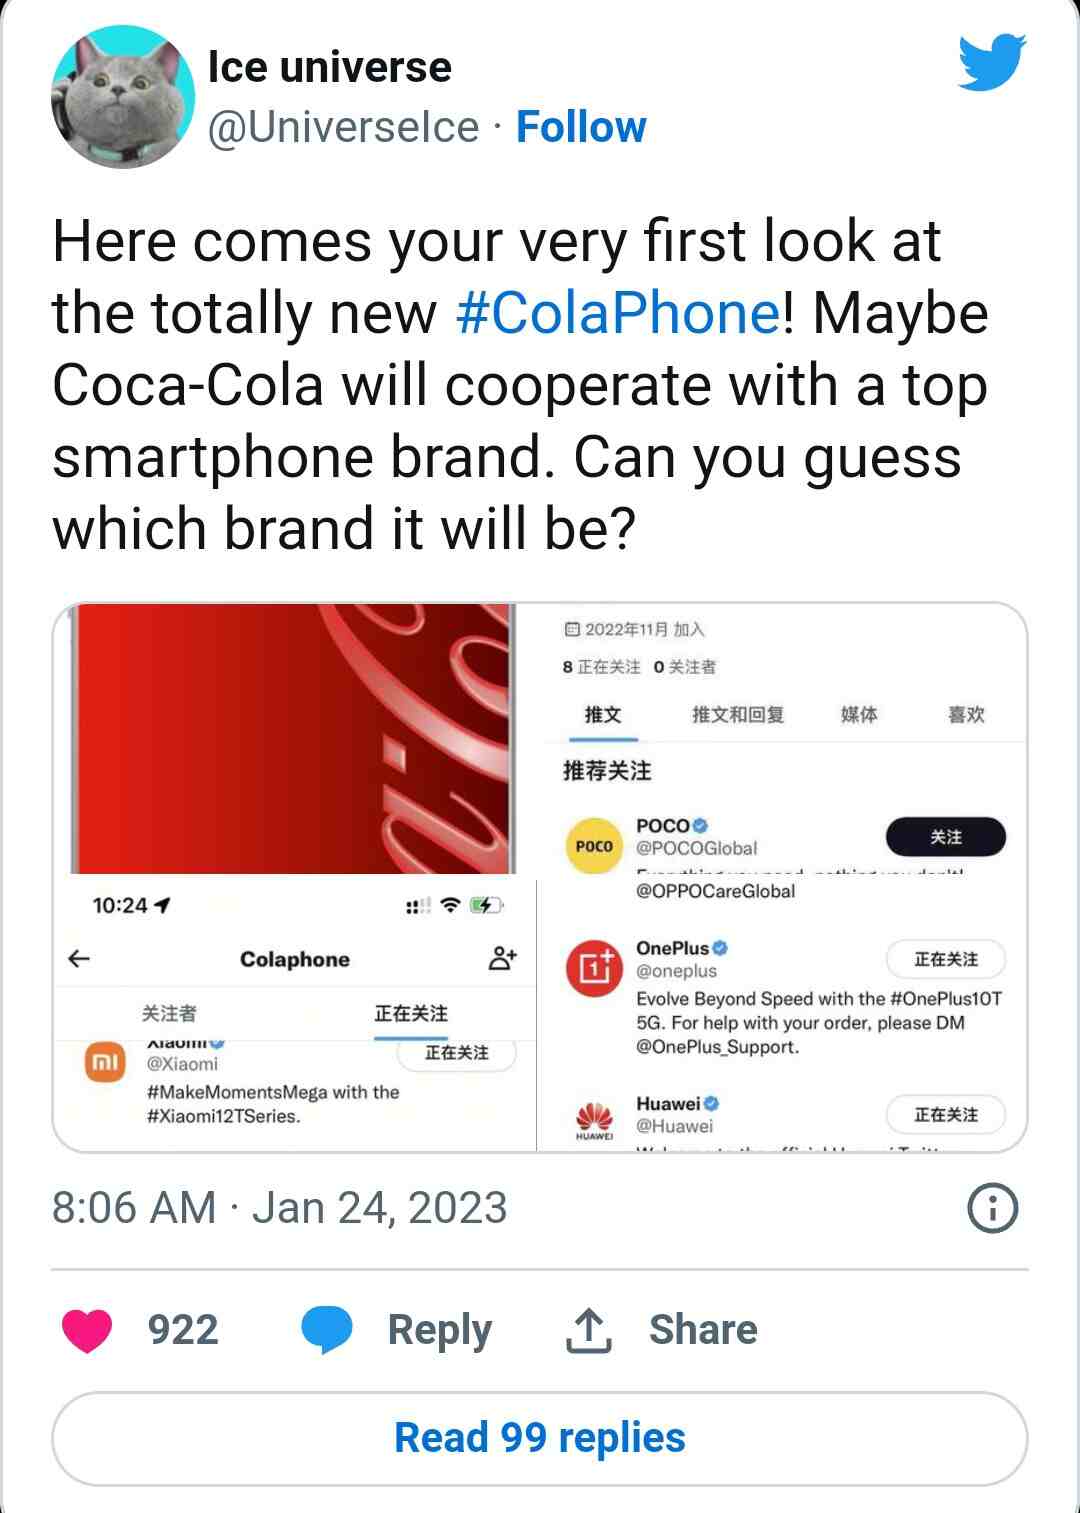 Coca-cola smartphone